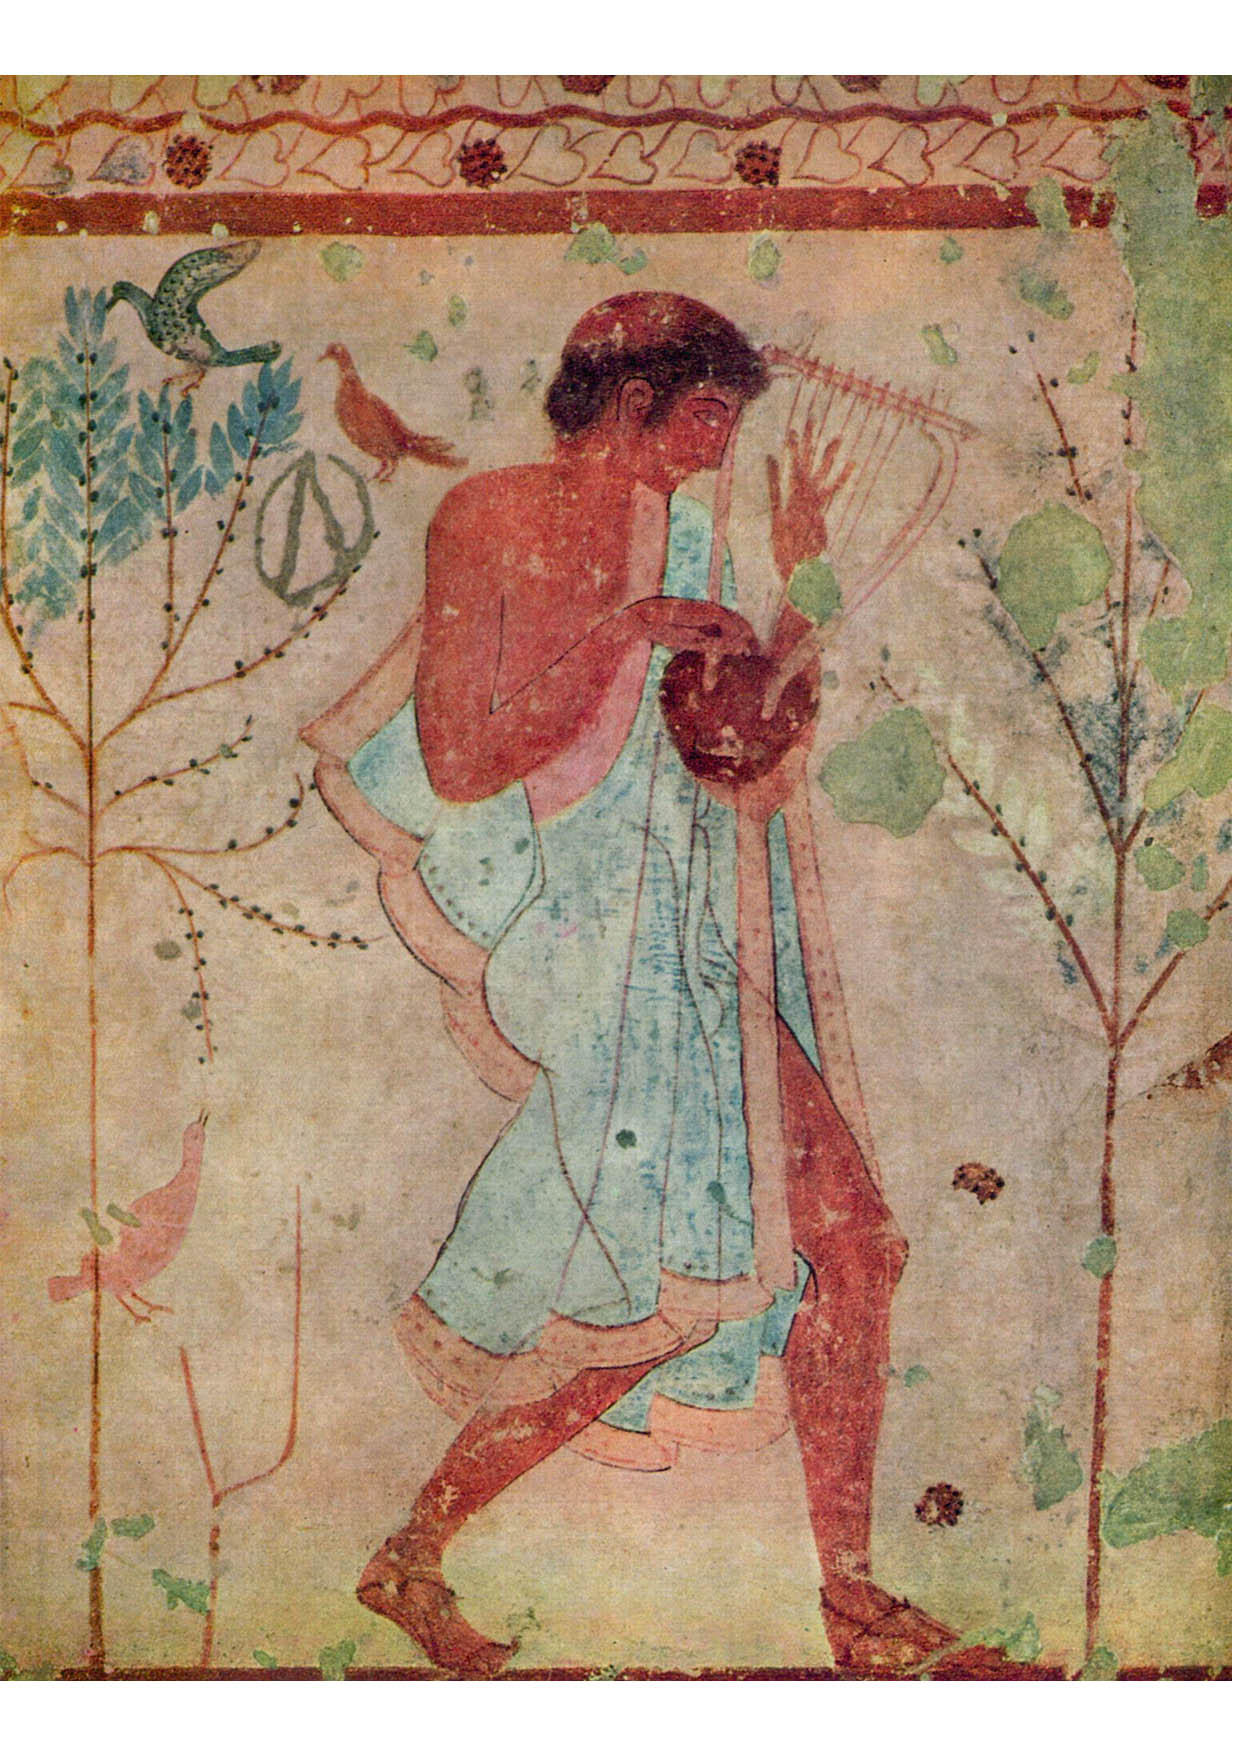 Imagen pintura etrusca